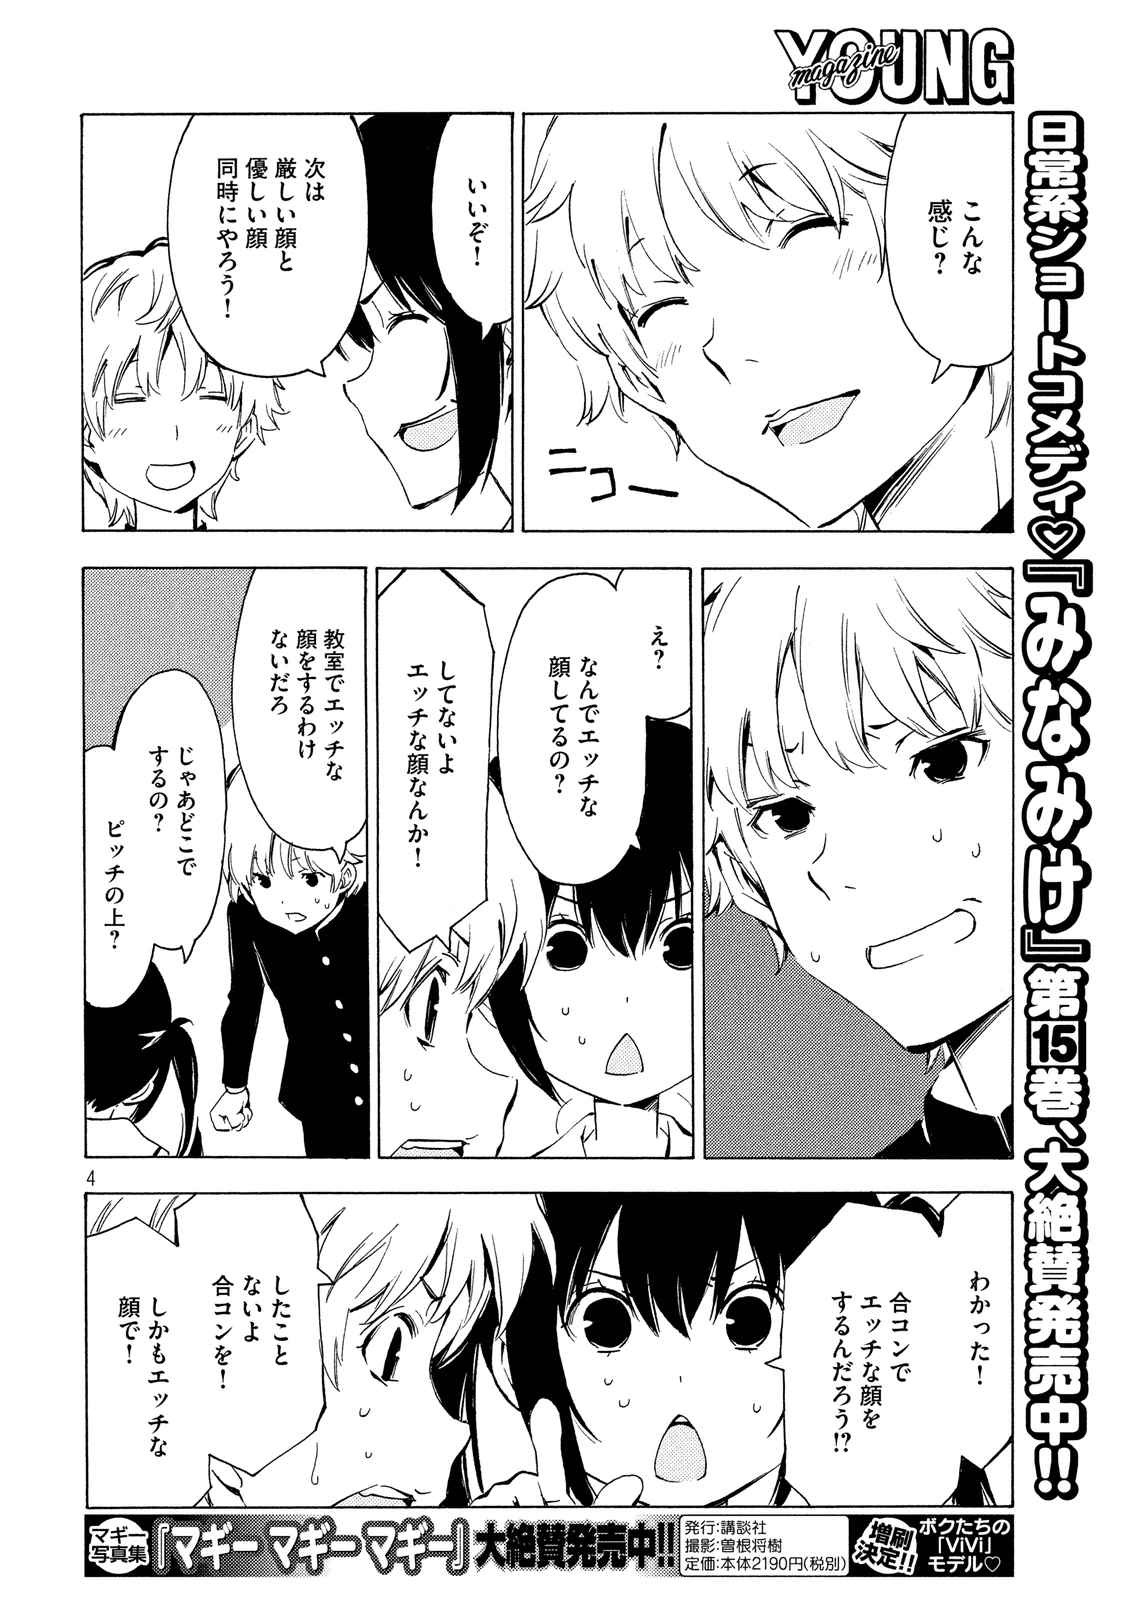 Minami-ke - Chapter 313 - Page 4